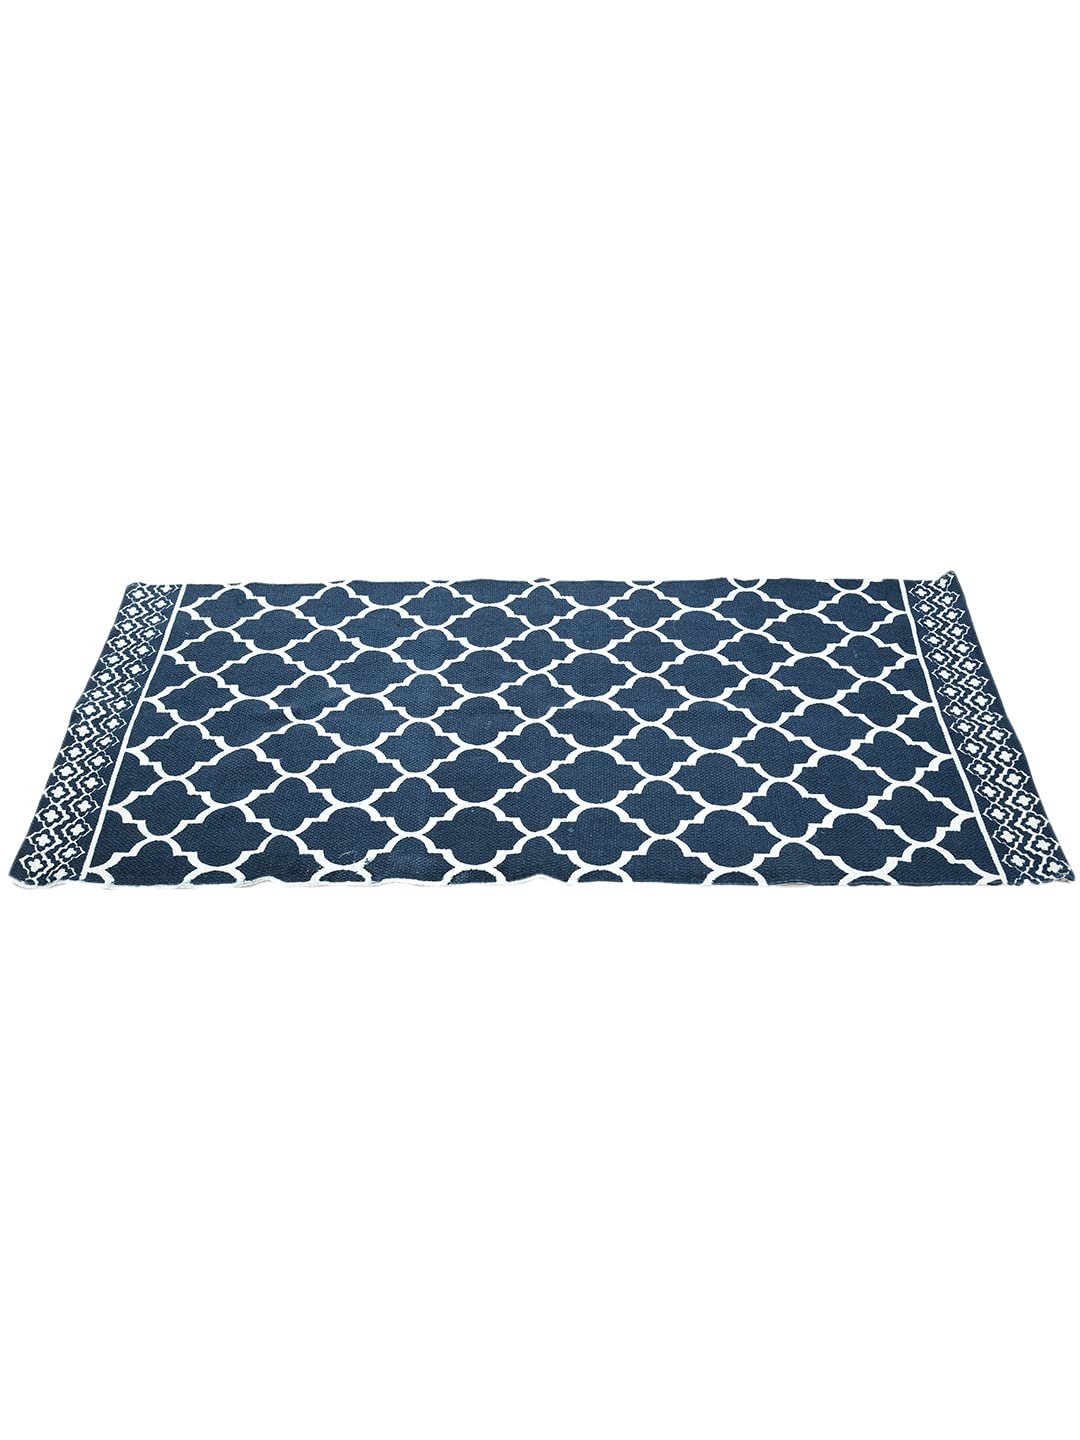 Chic Home Cotton Multipurpose Handloom Printed Extra Large Floor Rug (Blue)